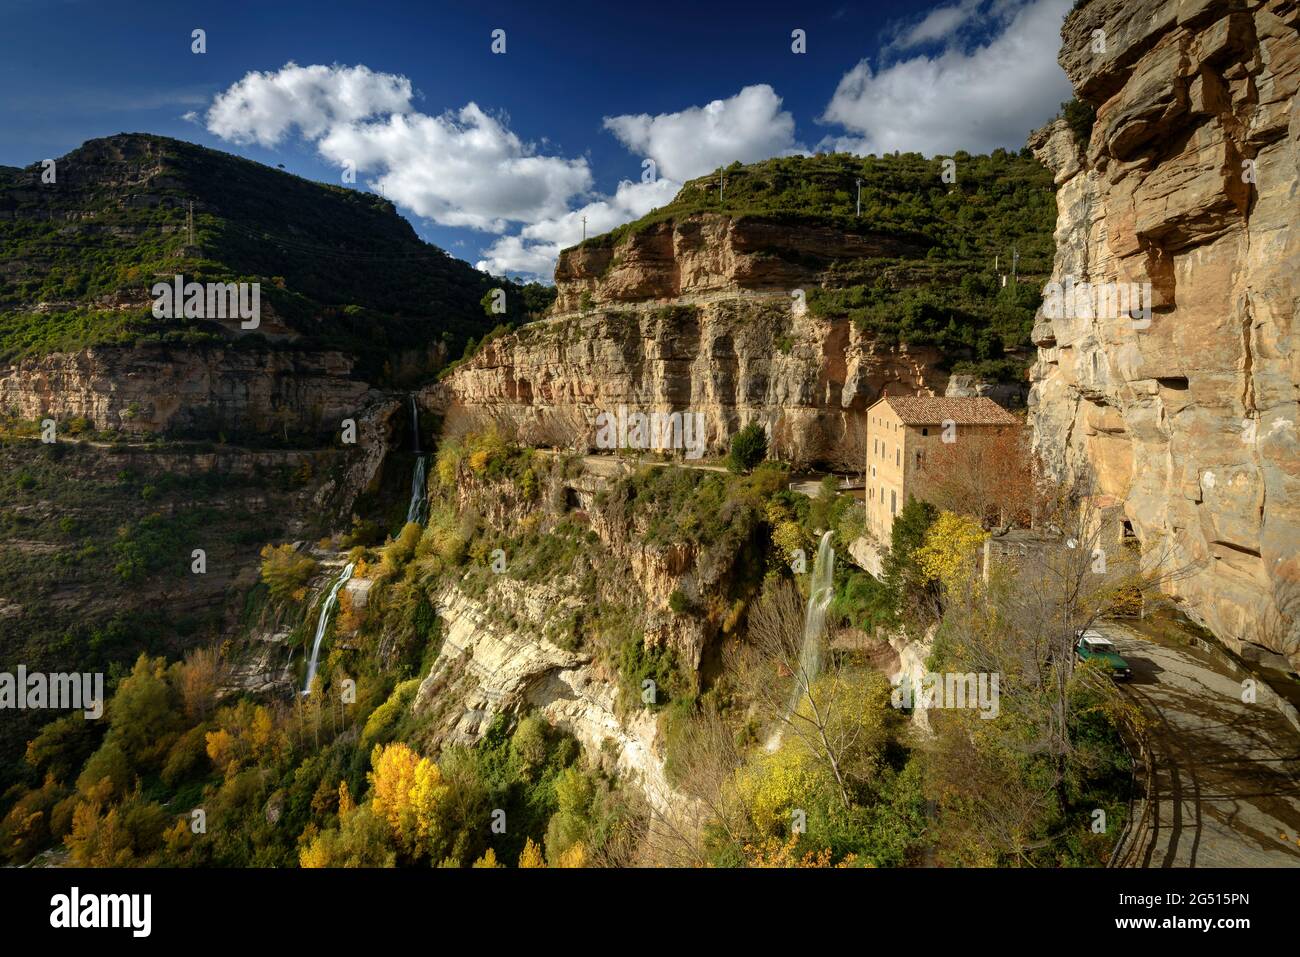 Sant Miquel del Fai sanctuary and waterfalls in autumn (Barcelona, Catalonia, Spain) ESP: Cascadas y santuario de Sant Miquel del Fai, en otoño España Stock Photo